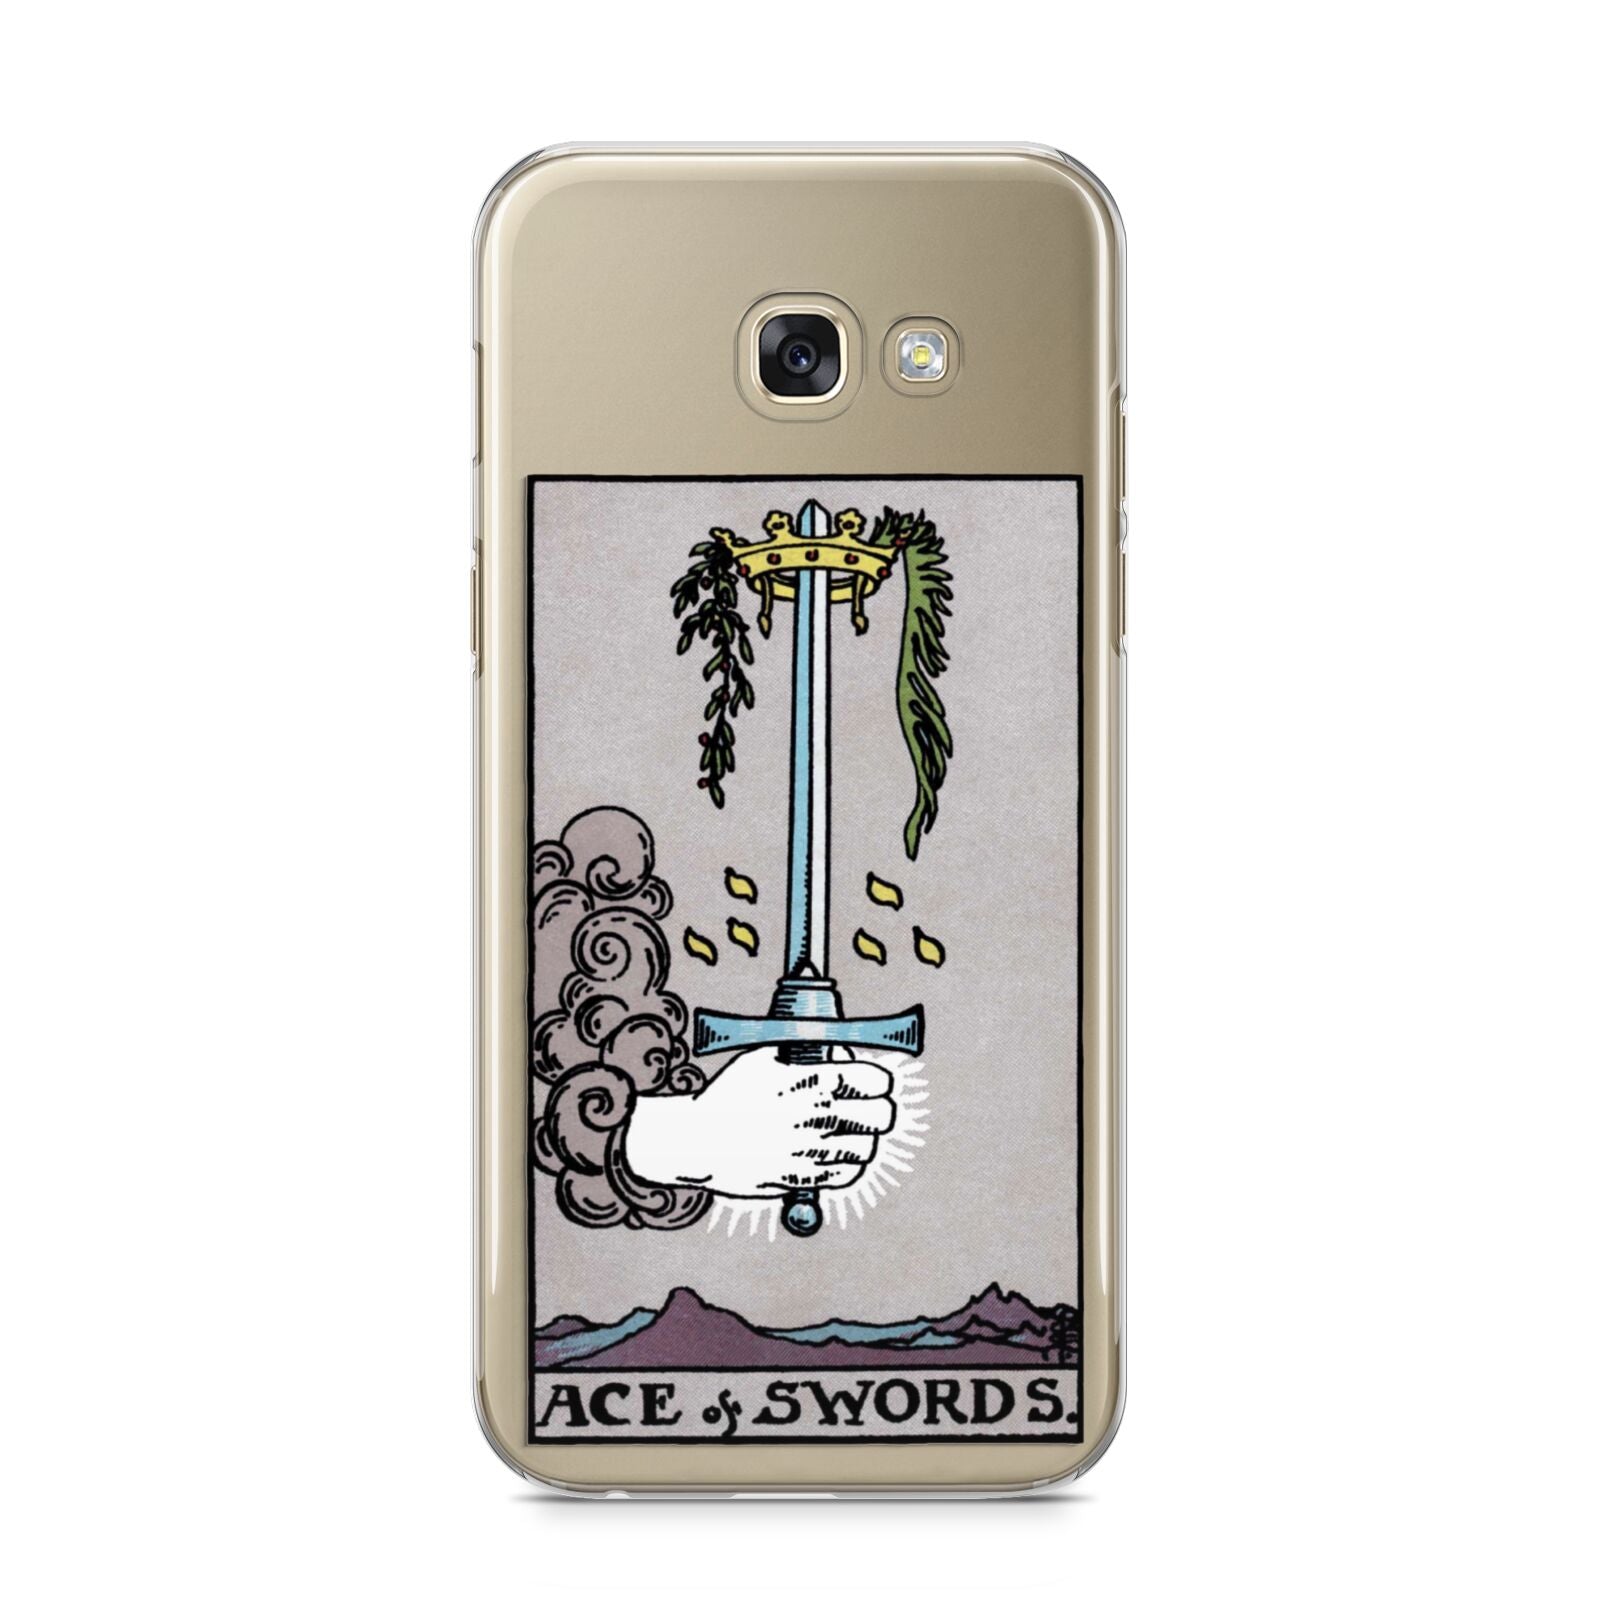 Ace of Swords Tarot Card Samsung Galaxy A5 2017 Case on gold phone